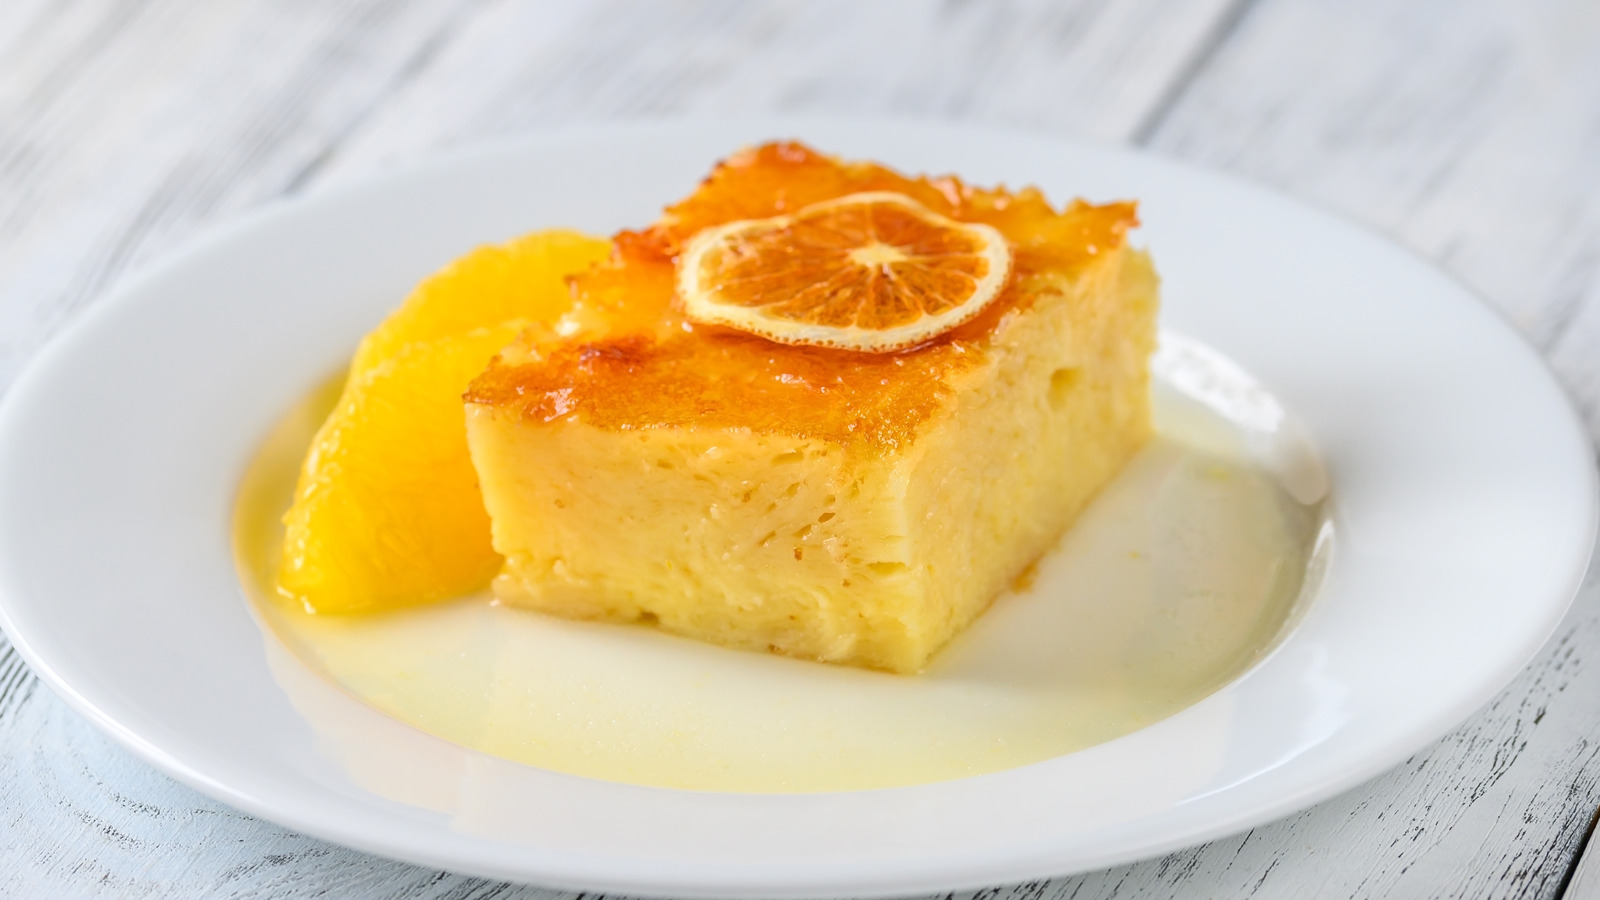 Portokalopita: The Greek Orange Cake Packed With Shredded Phyllo